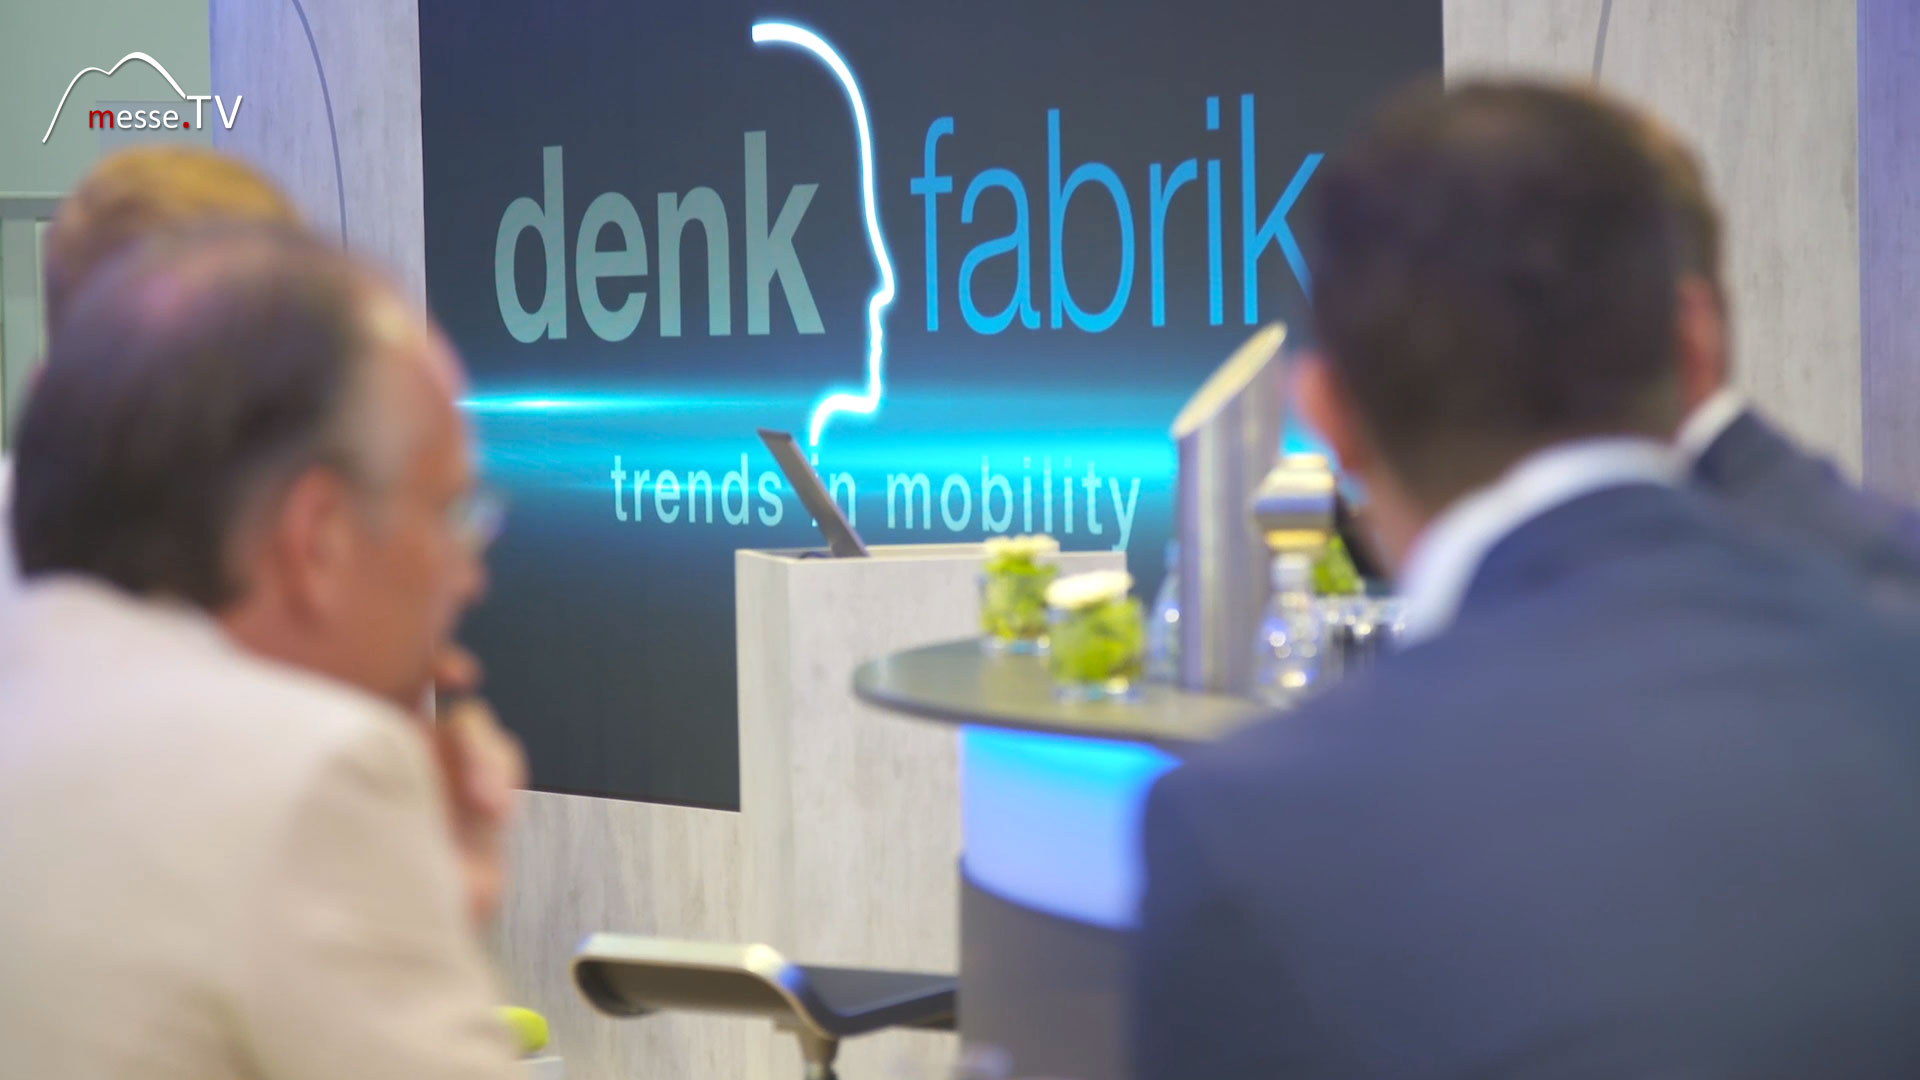 KRONE Denkfabrik trends in mobility